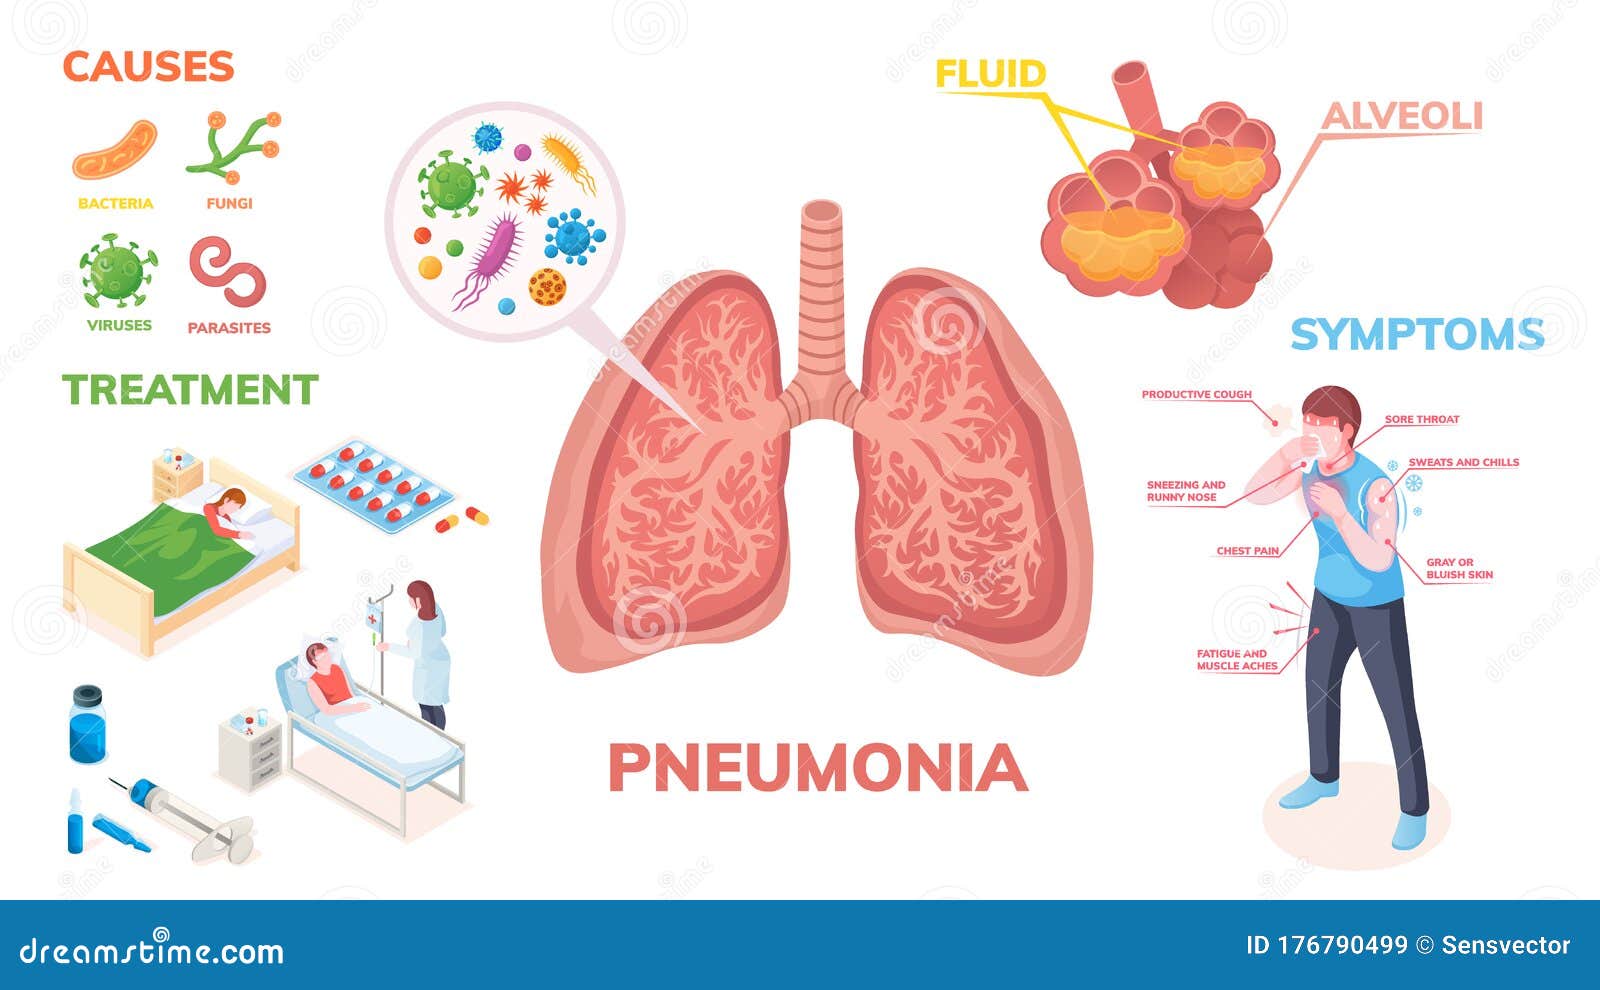 about pneumonia disease